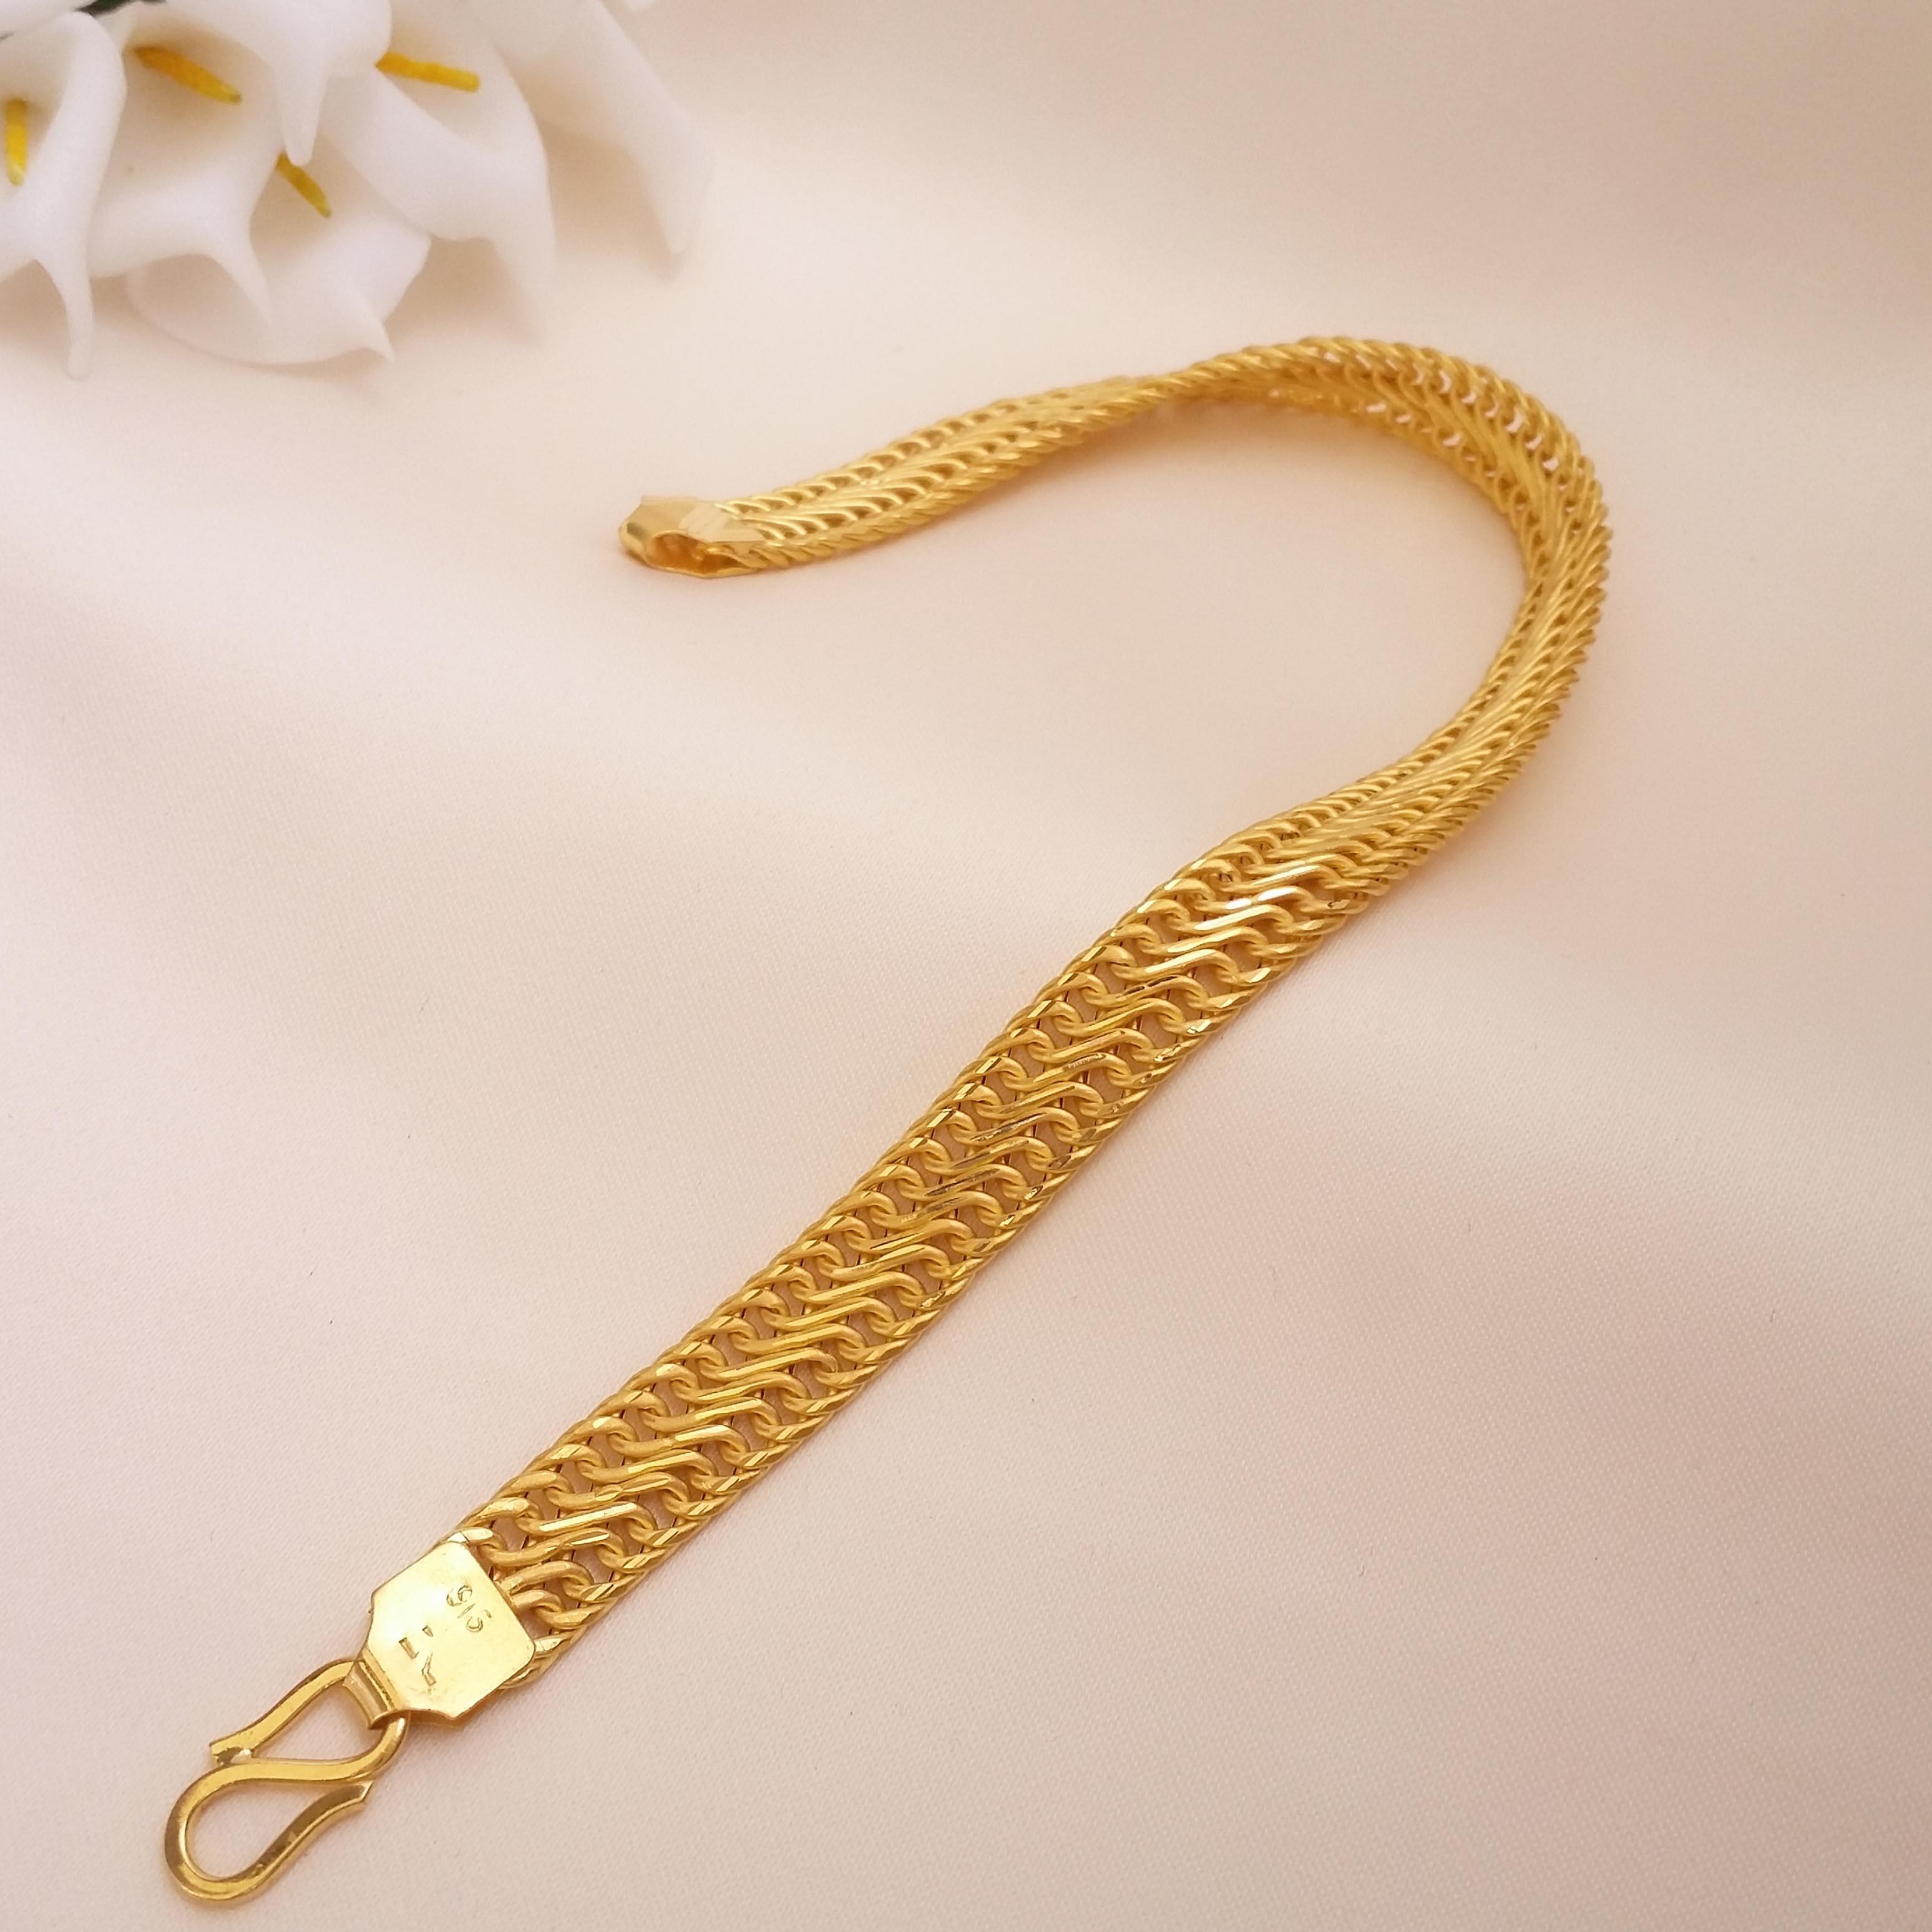 Details more than 75 gold bracelet new design latest